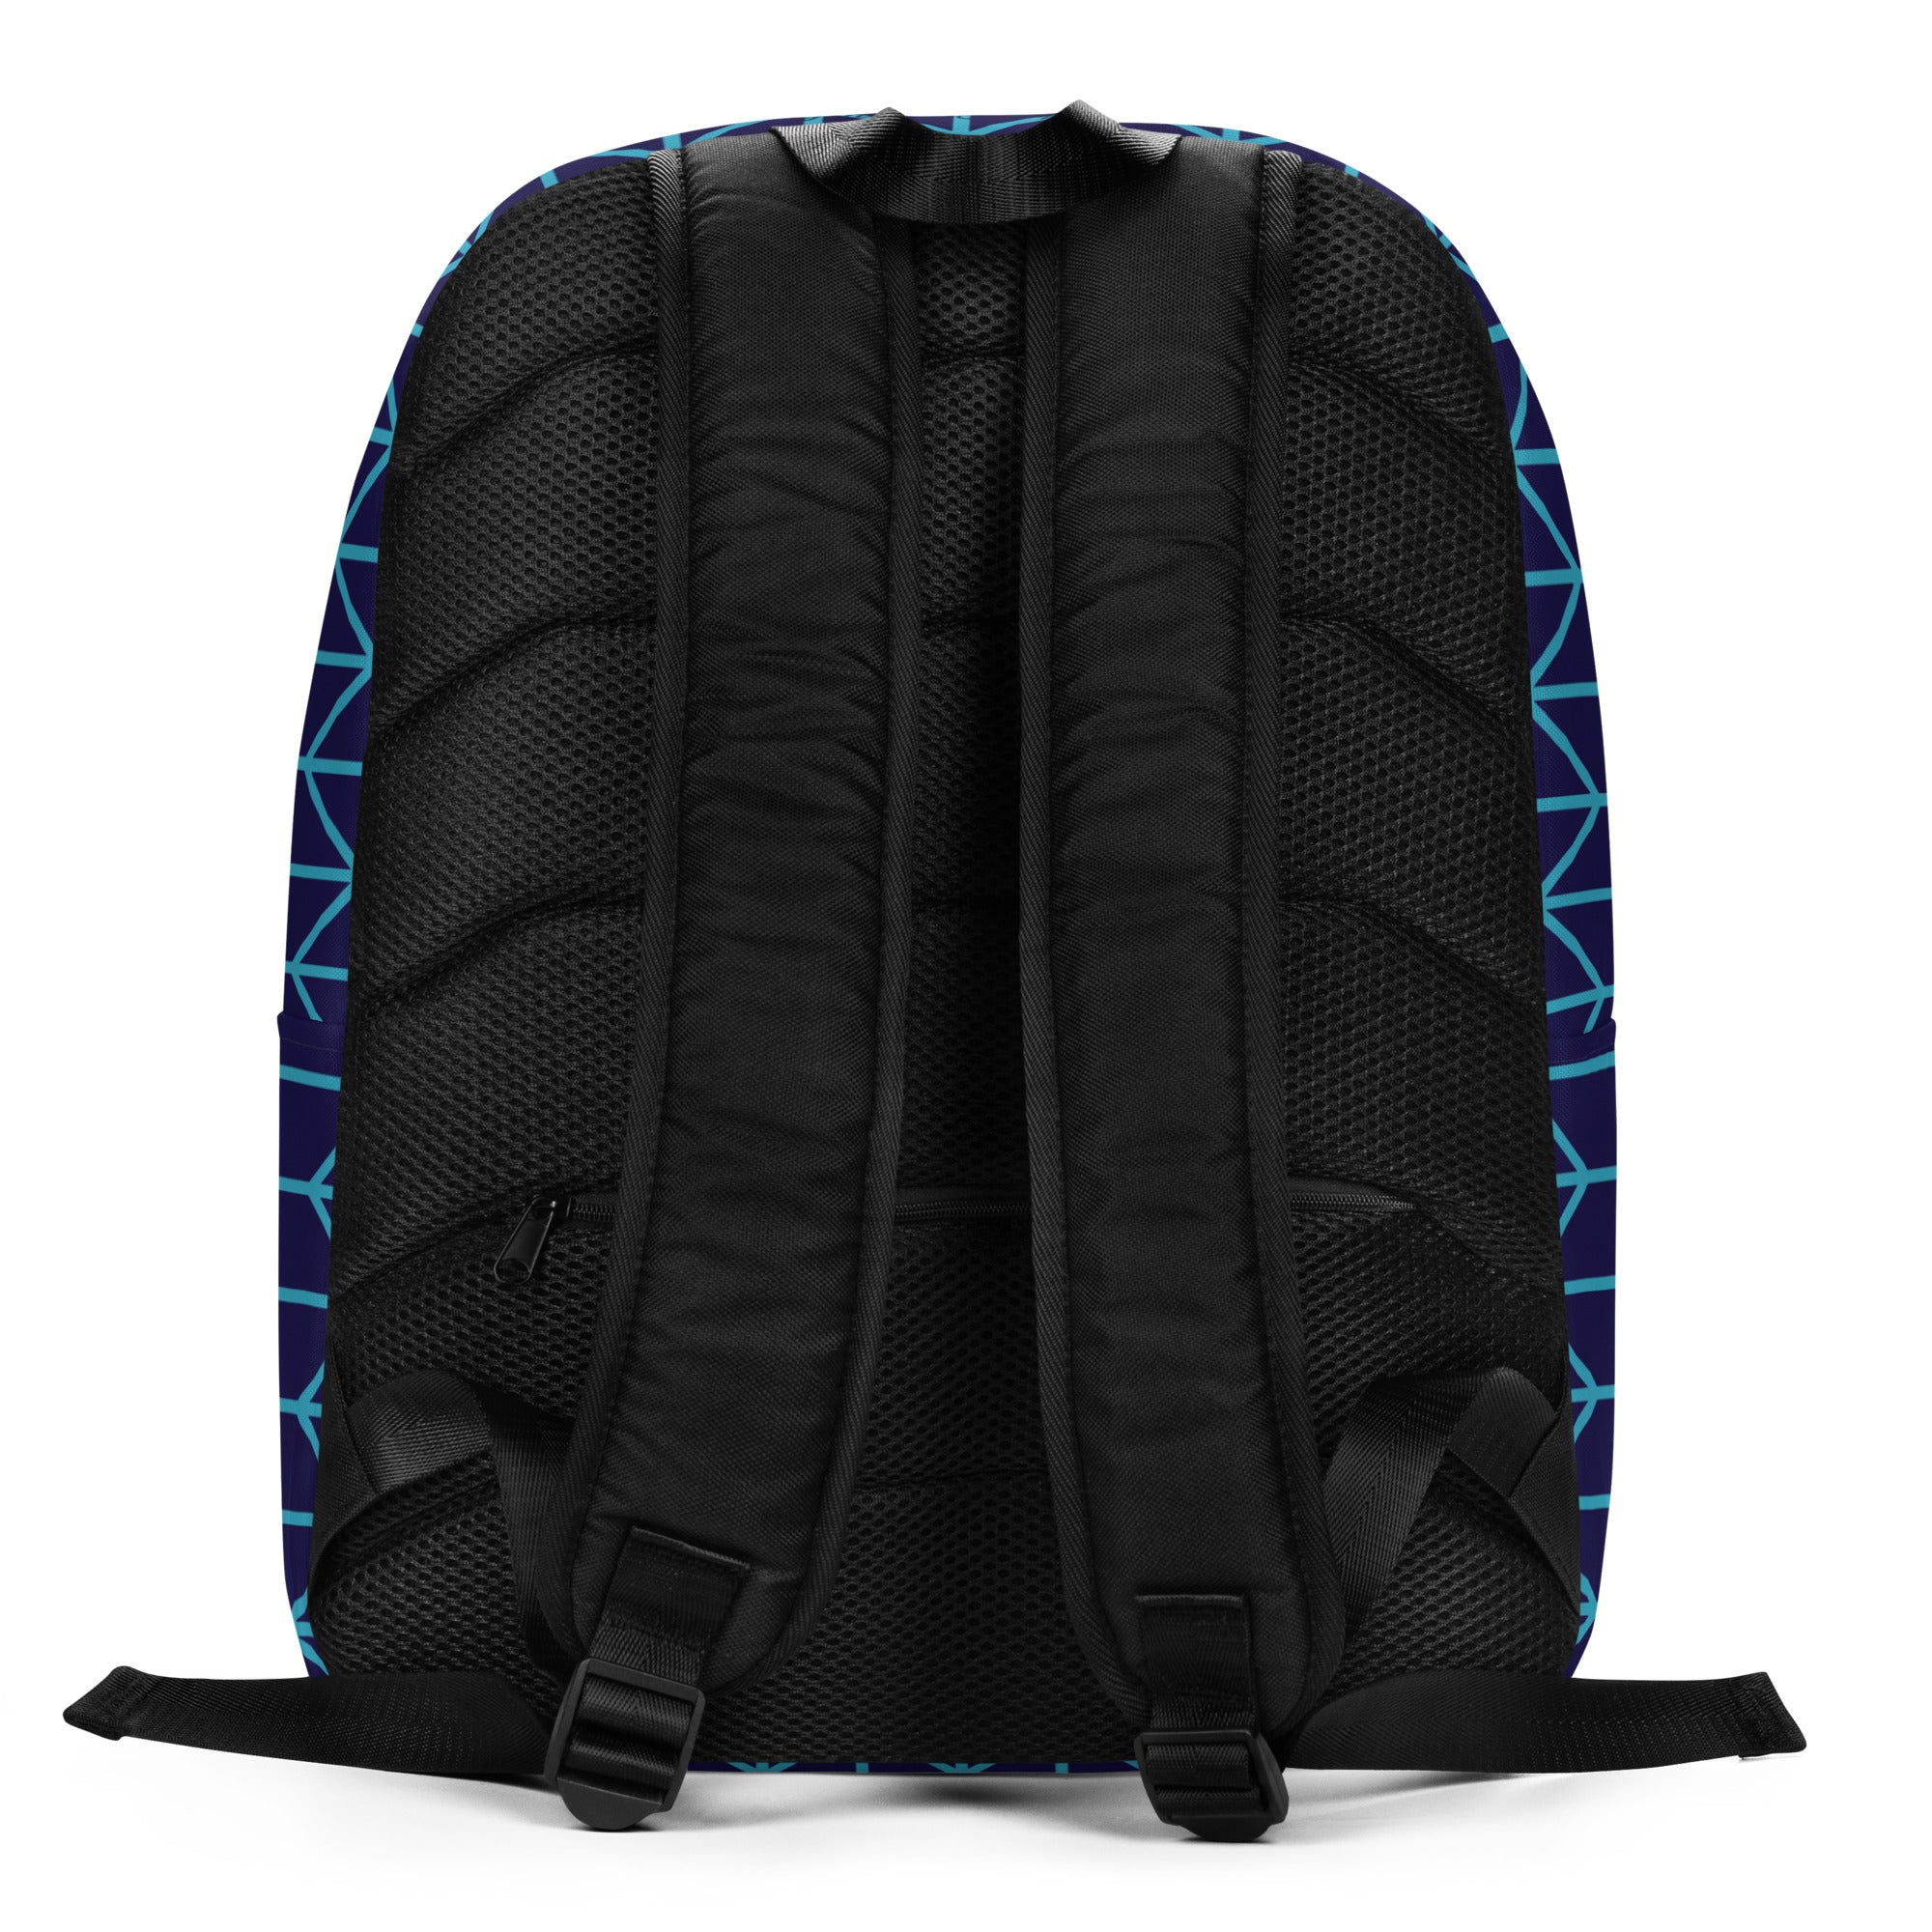 Sports Dad Minimalist Backpack - Backsplash